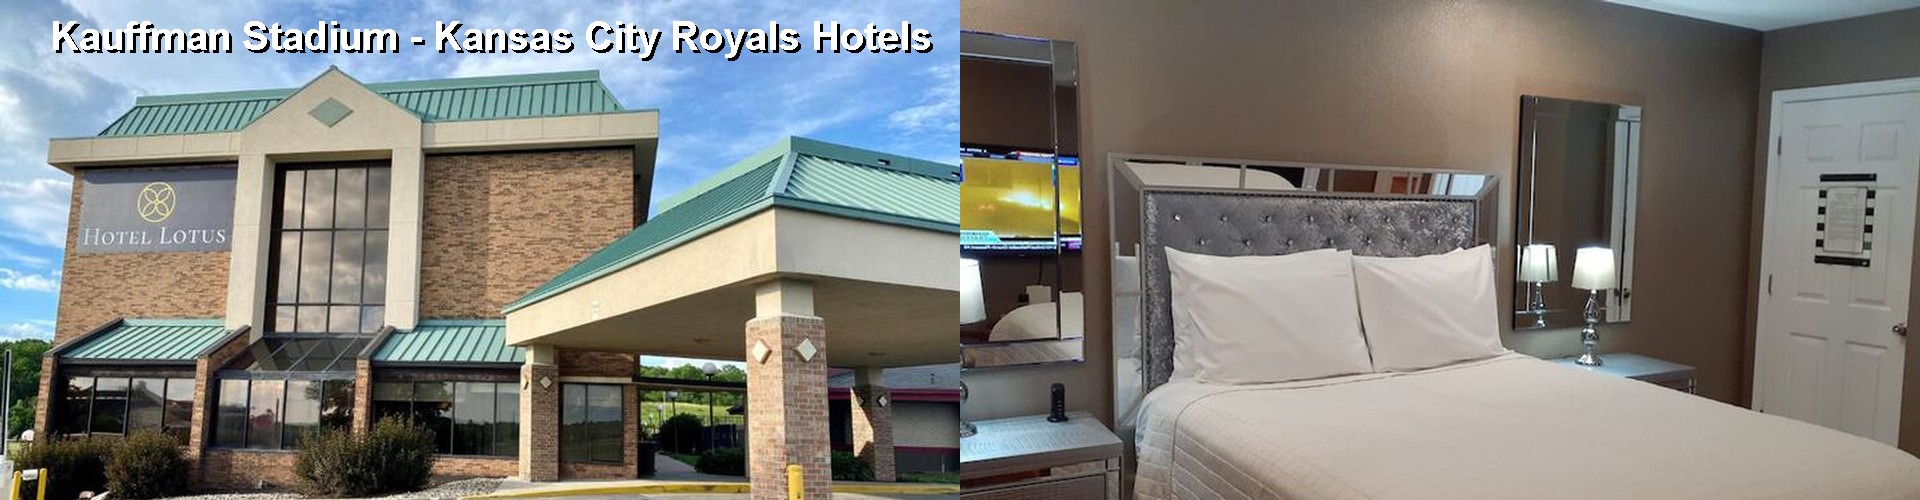 3 Best Hotels near Kauffman Stadium - Kansas City Royals